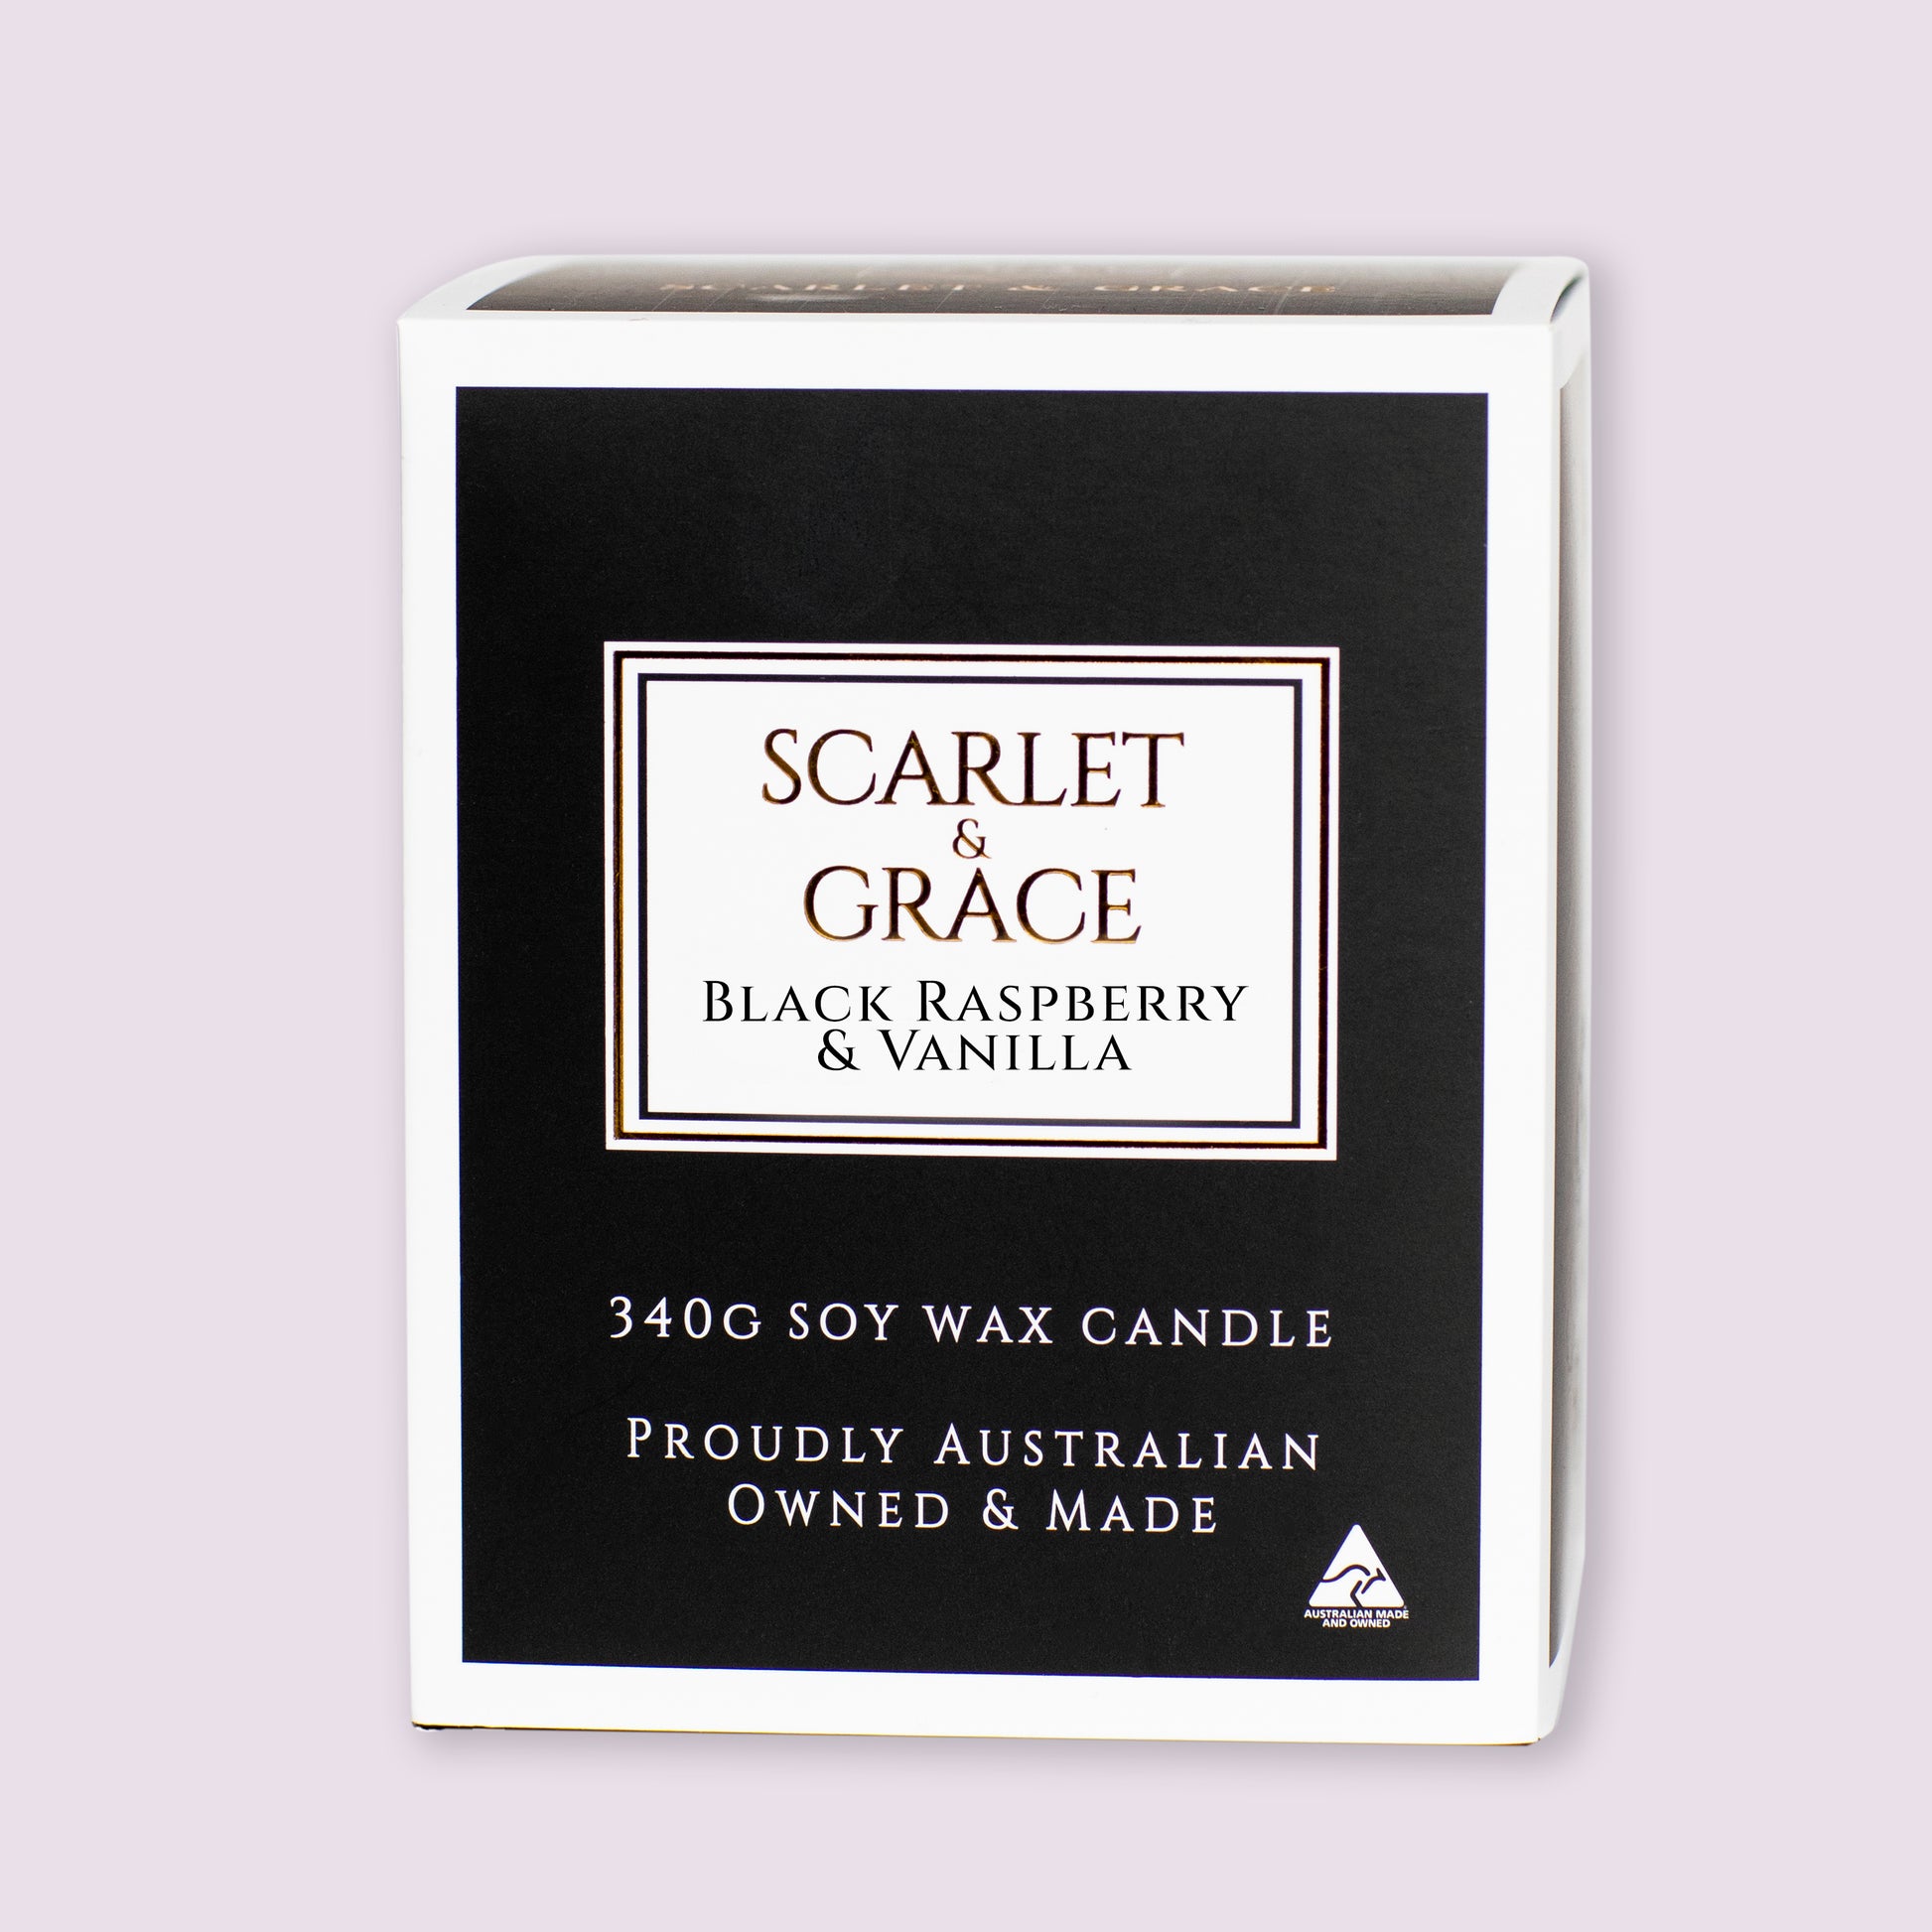 Black Raspberry & Vanilla - 340gm Soy Wax Candle - Scarlet & Grace